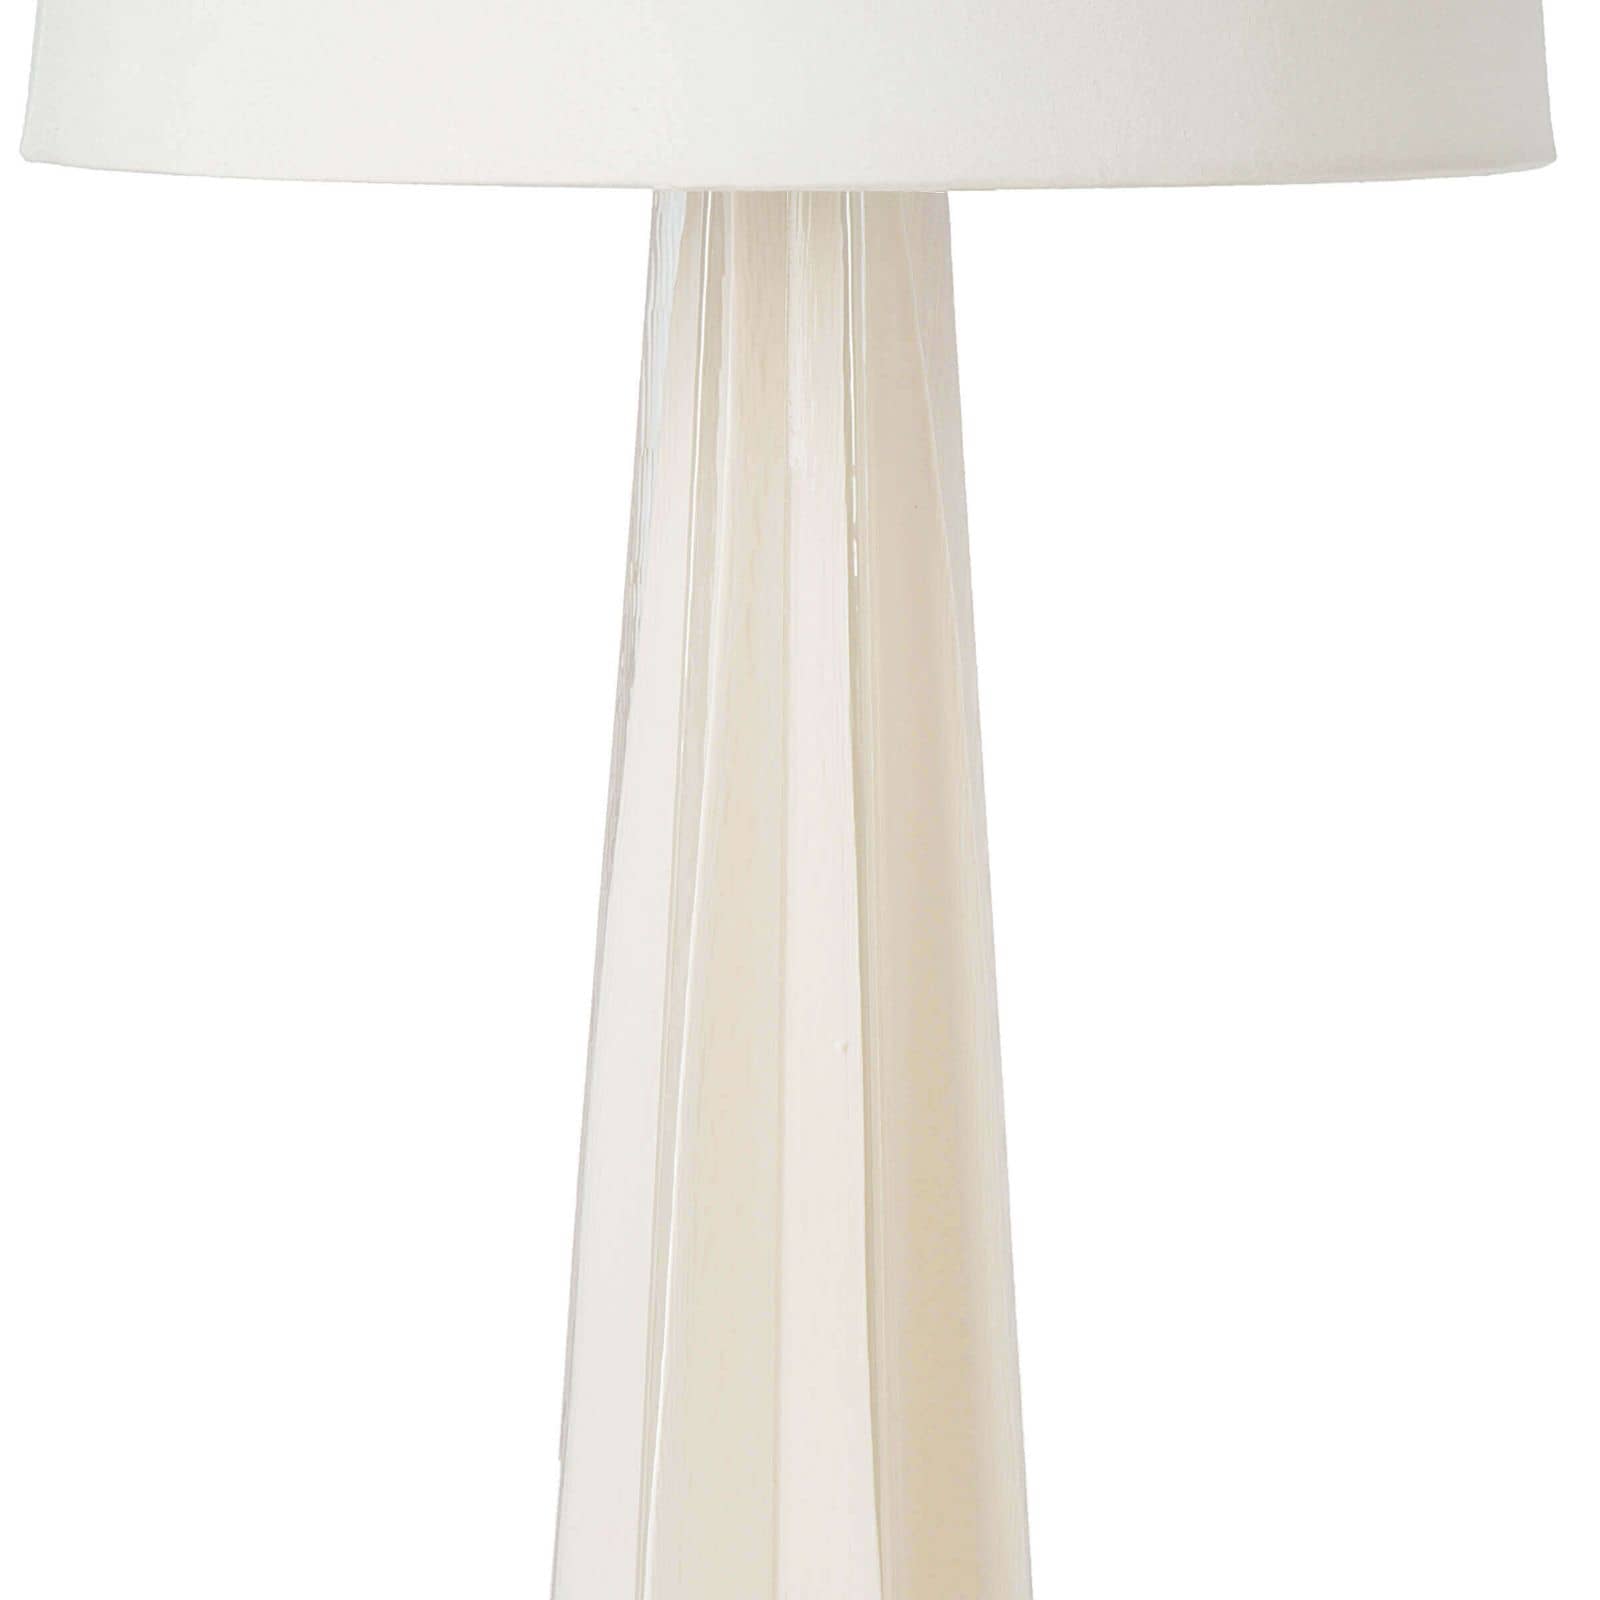 Regina Andrew Glass Star Table Lamp